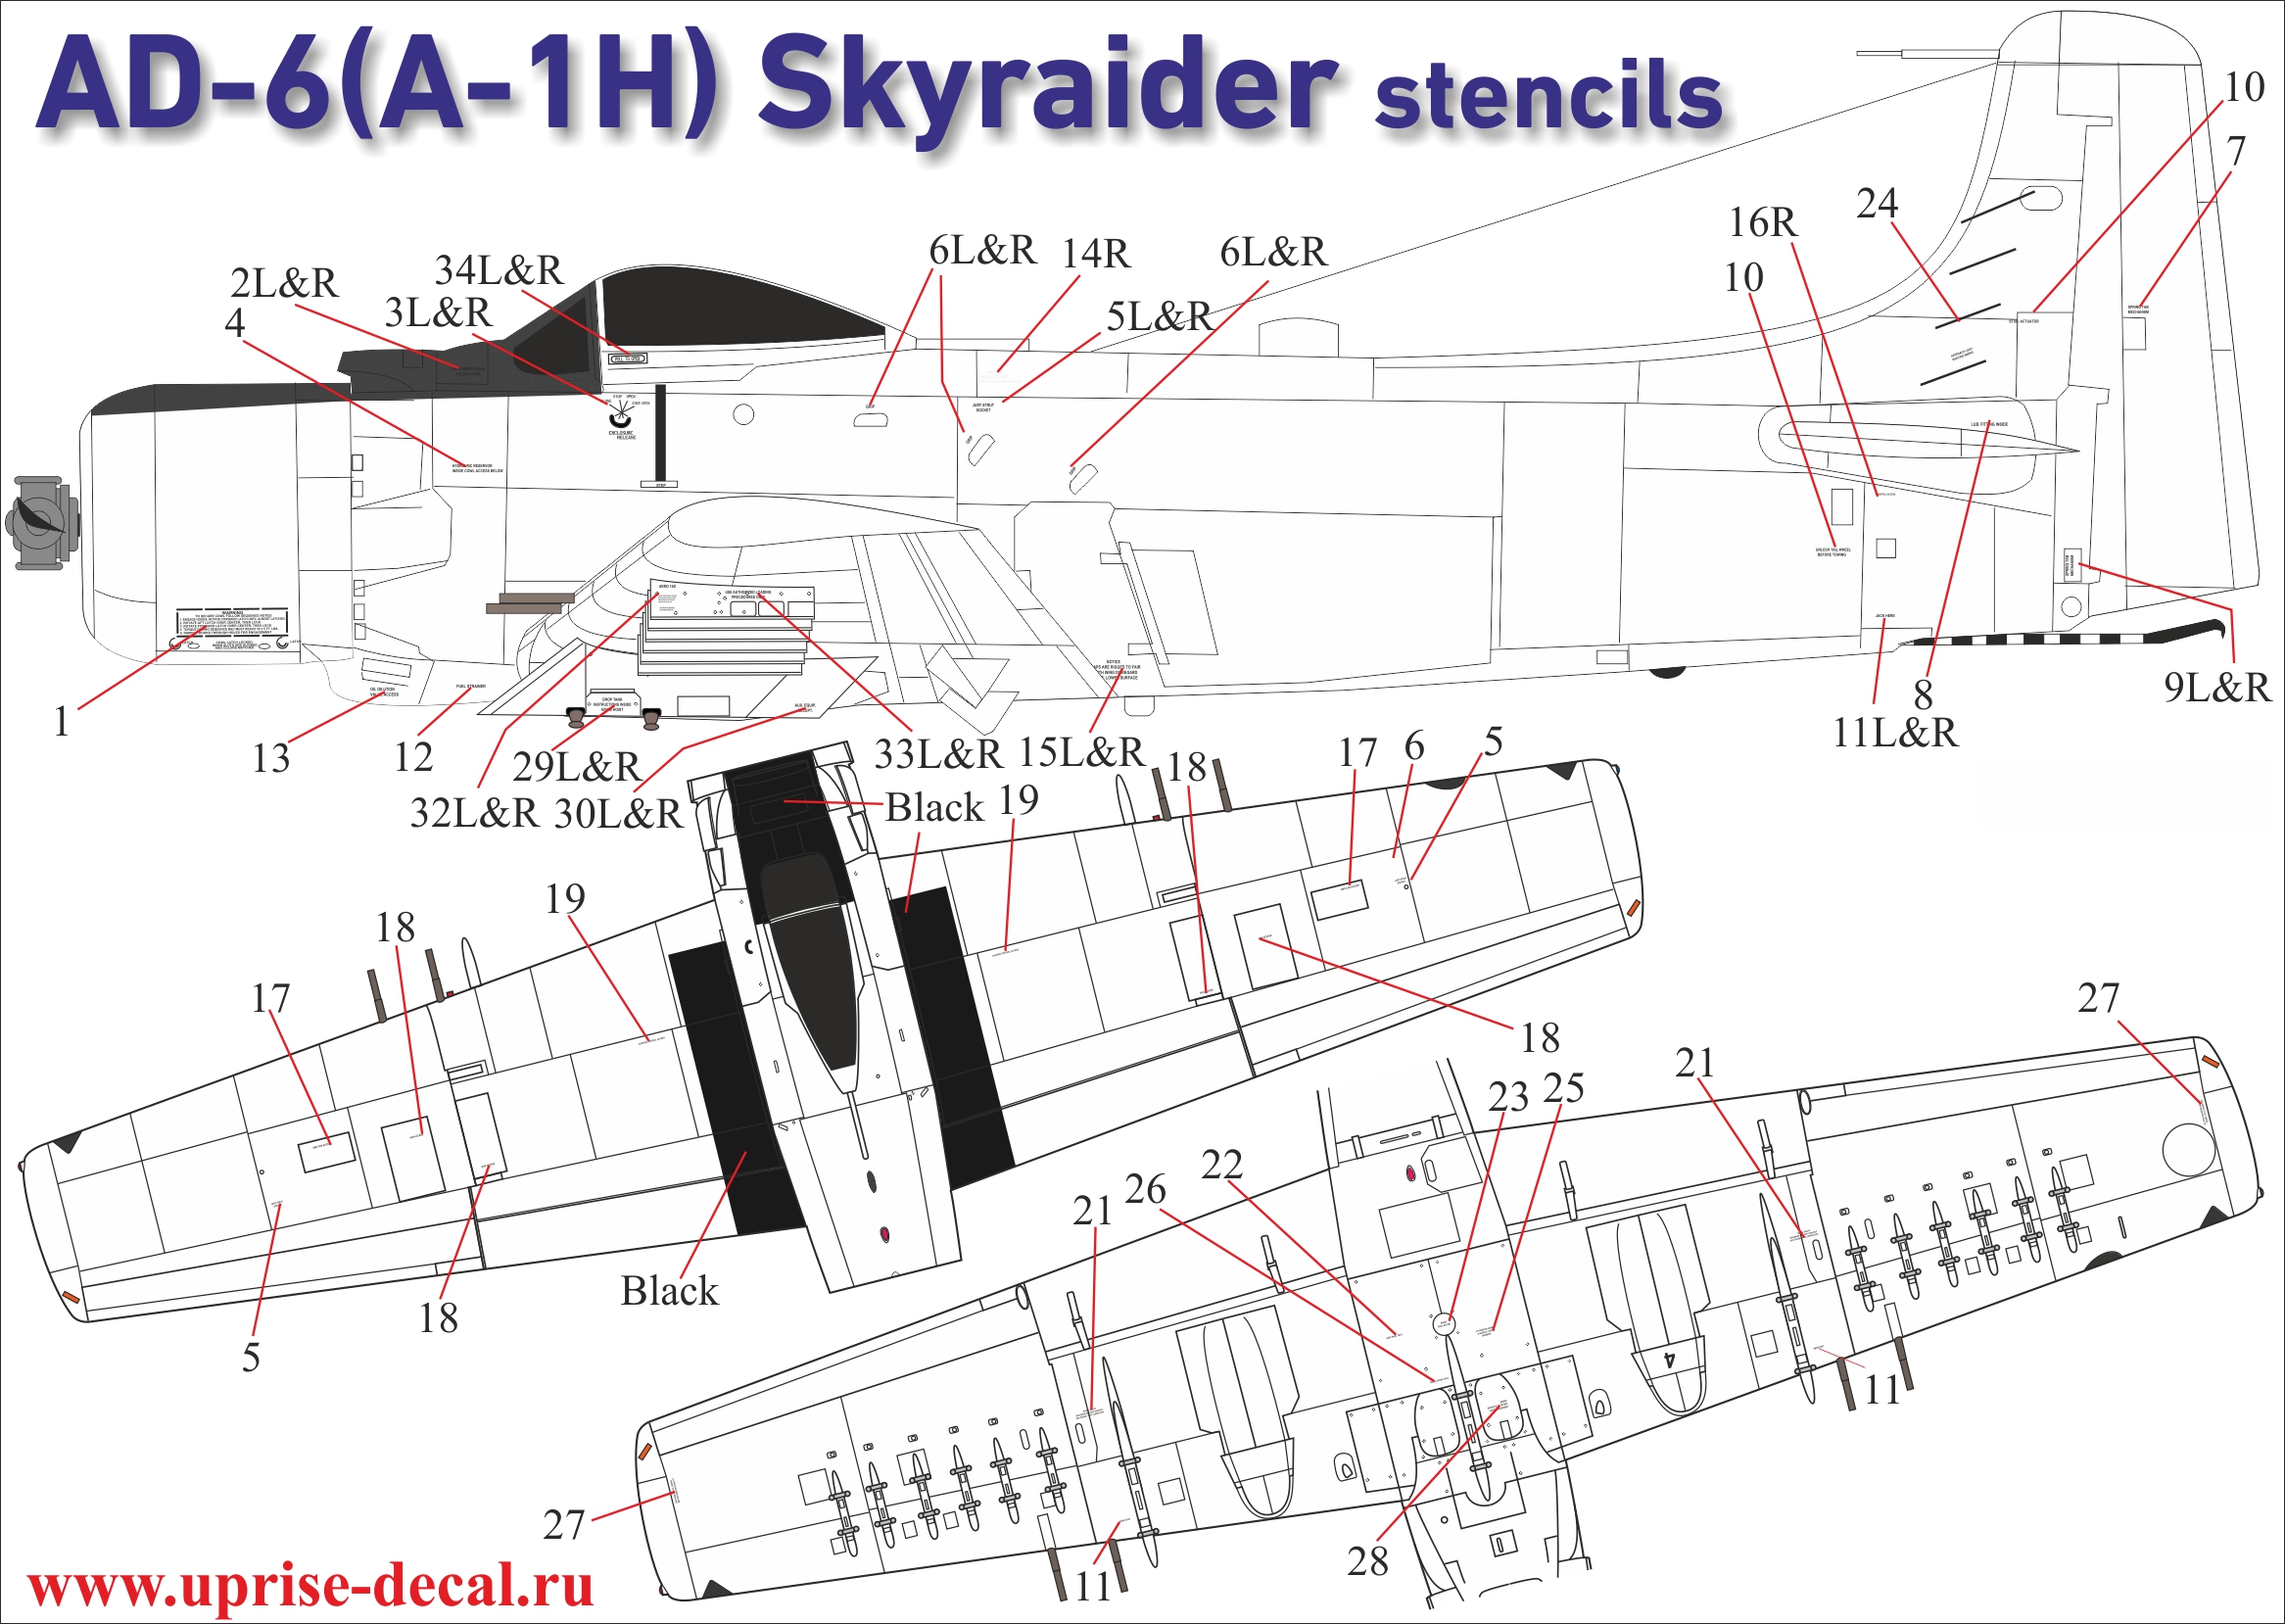 UR48151  декали  AD-6 (A-1H) Skyraider stencils (white)  (1:48)